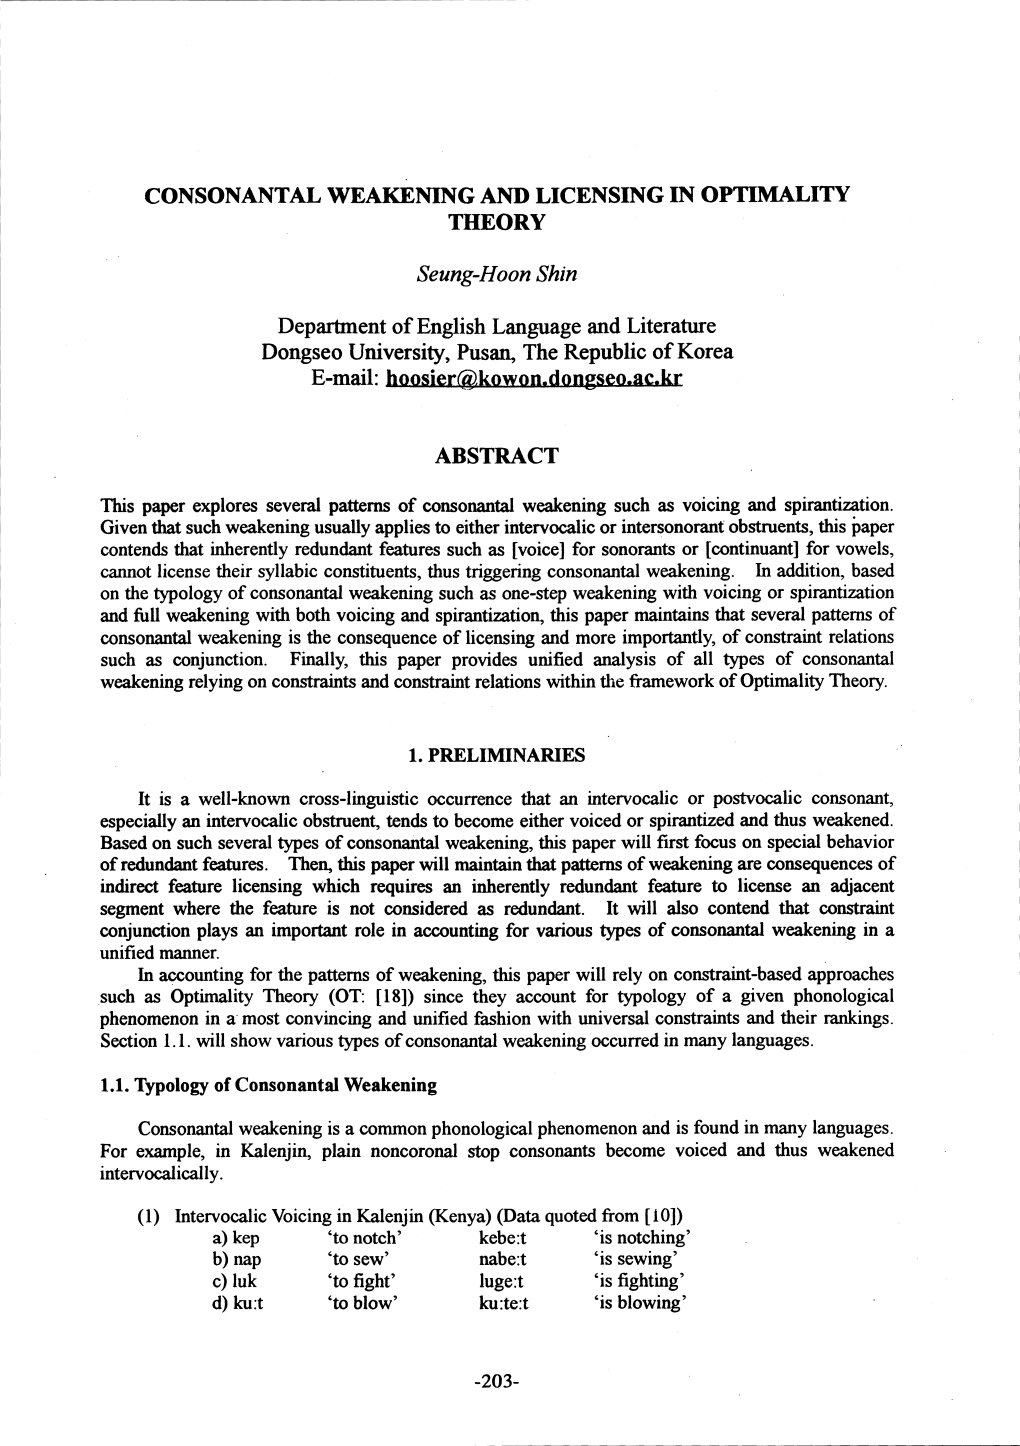 Consonantal Weakening and Licensing in Optimality Theory